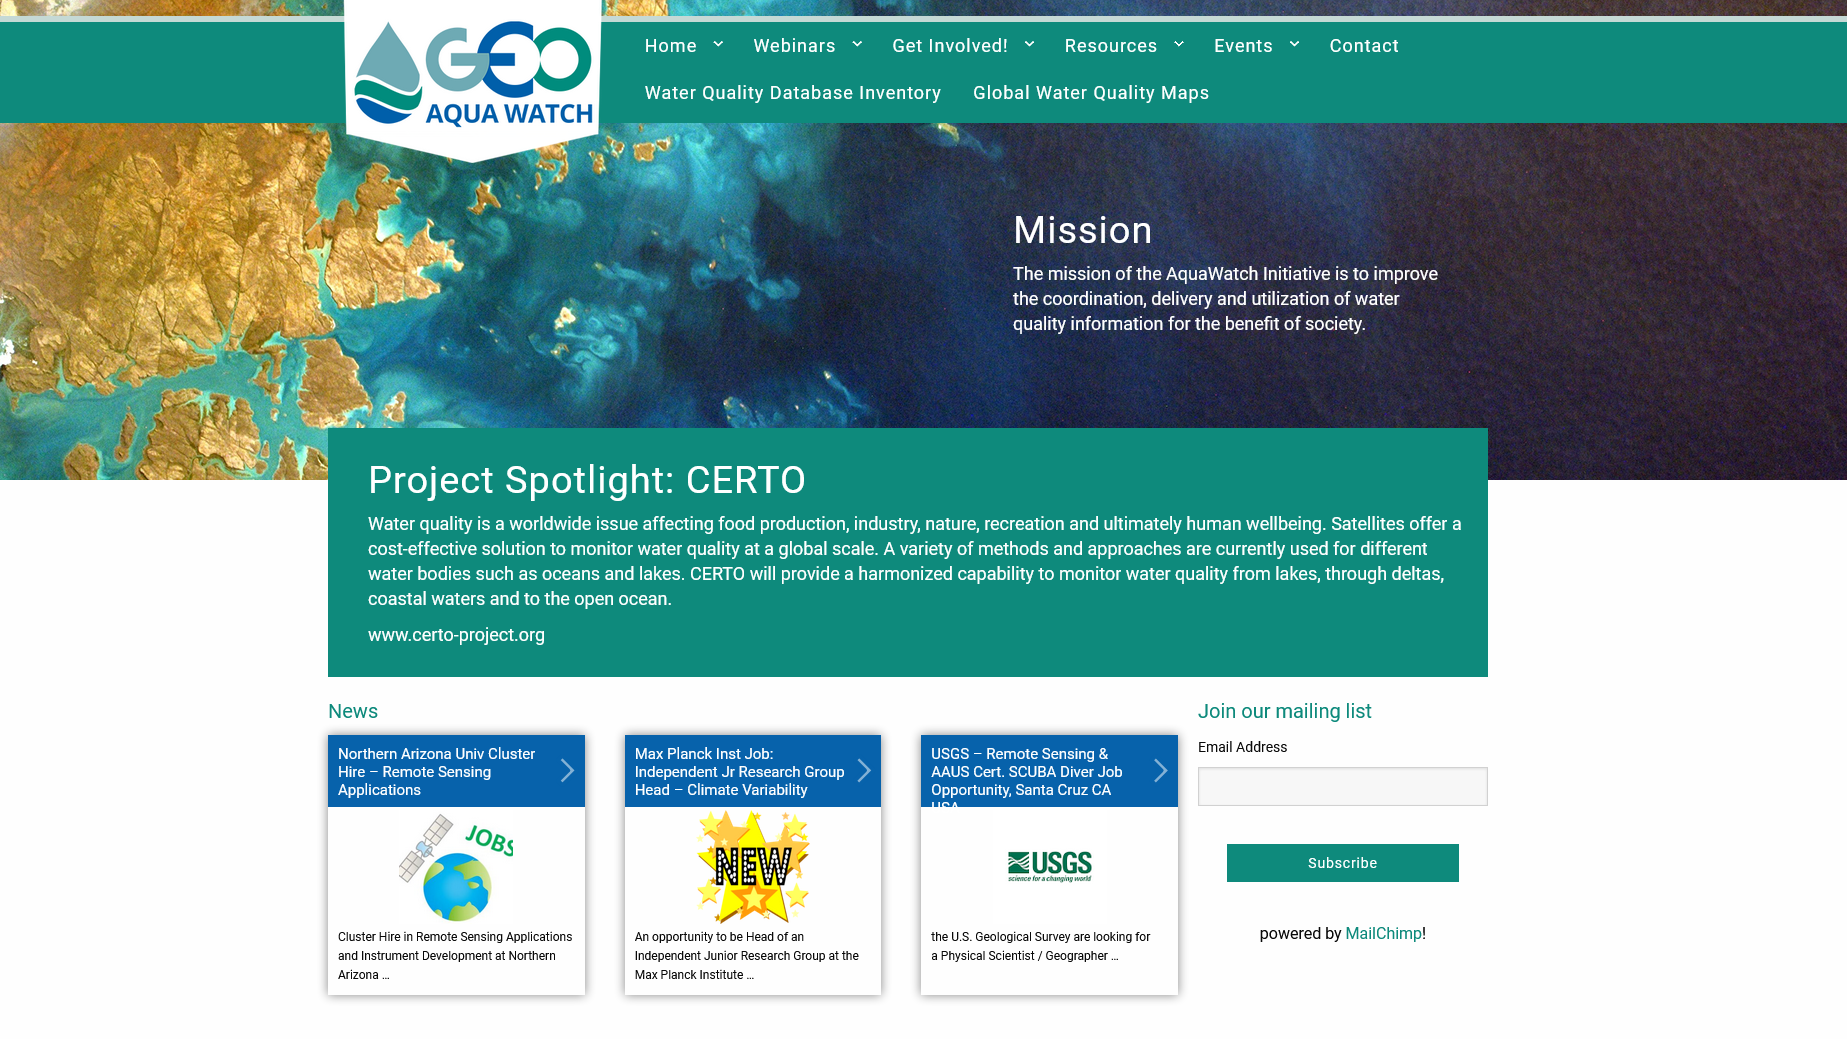 Landing page of the GEO AquaWatch portal